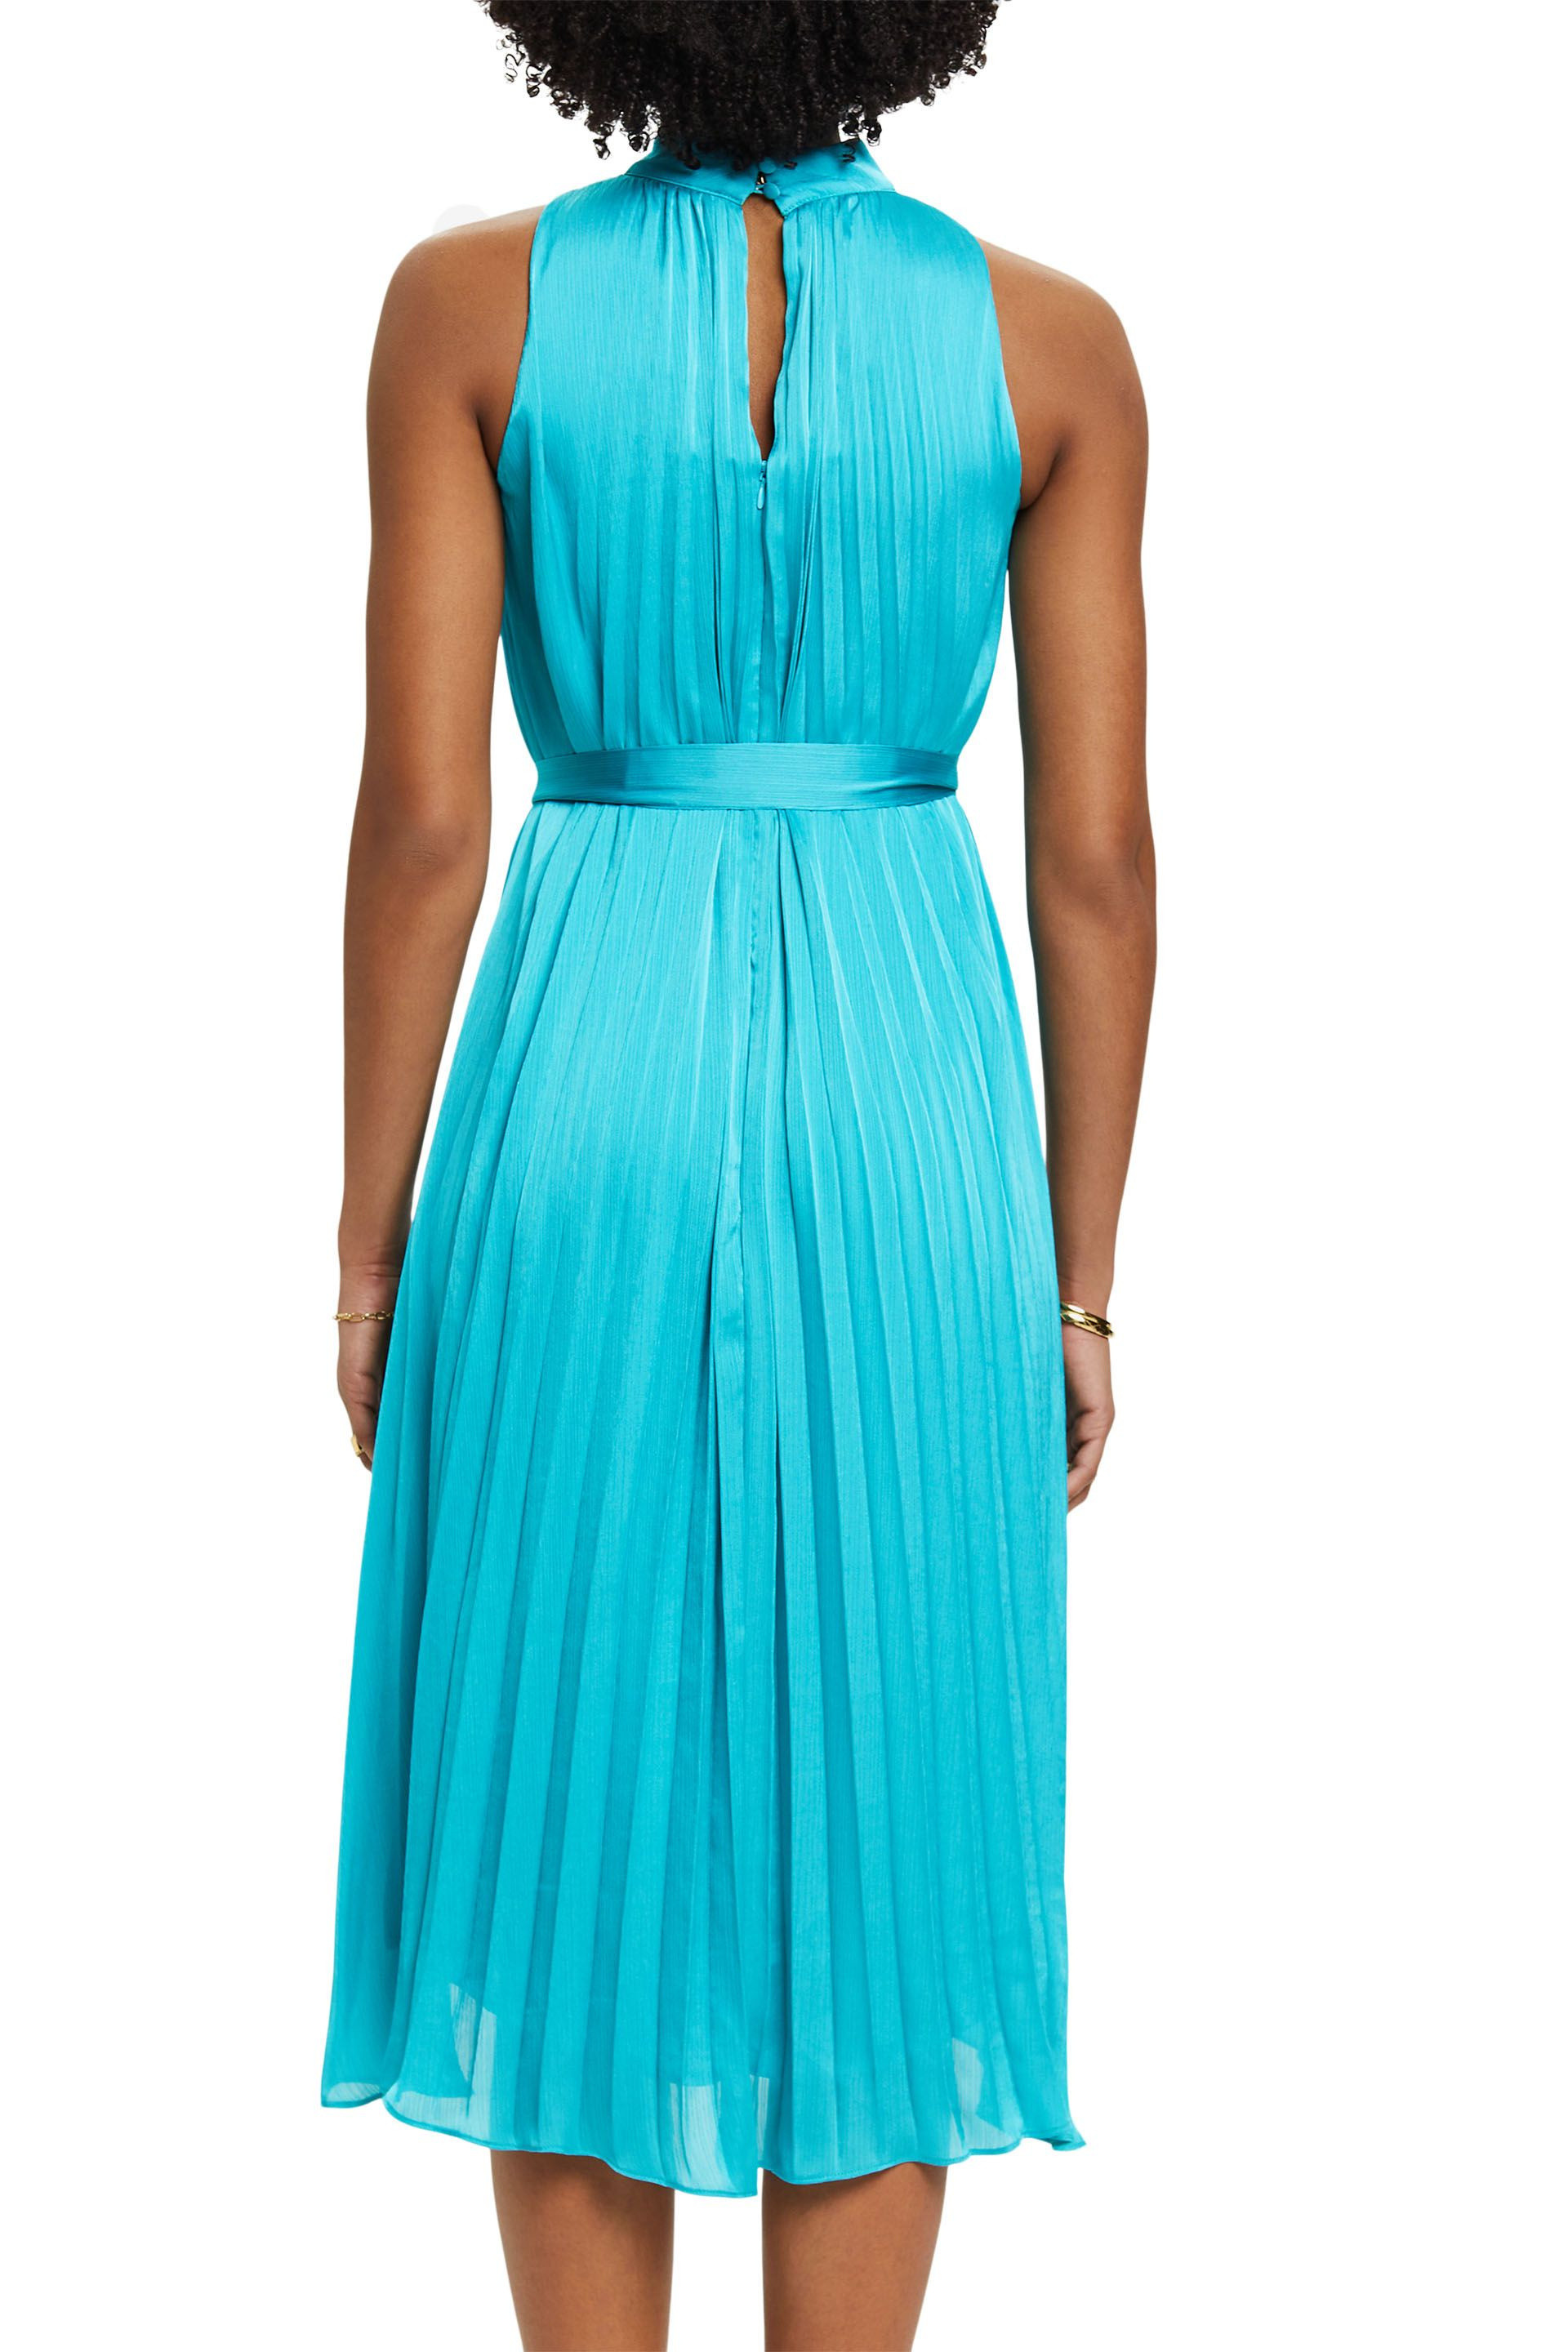 Esprit - Pleated satin dress, Turquoise, large image number 2